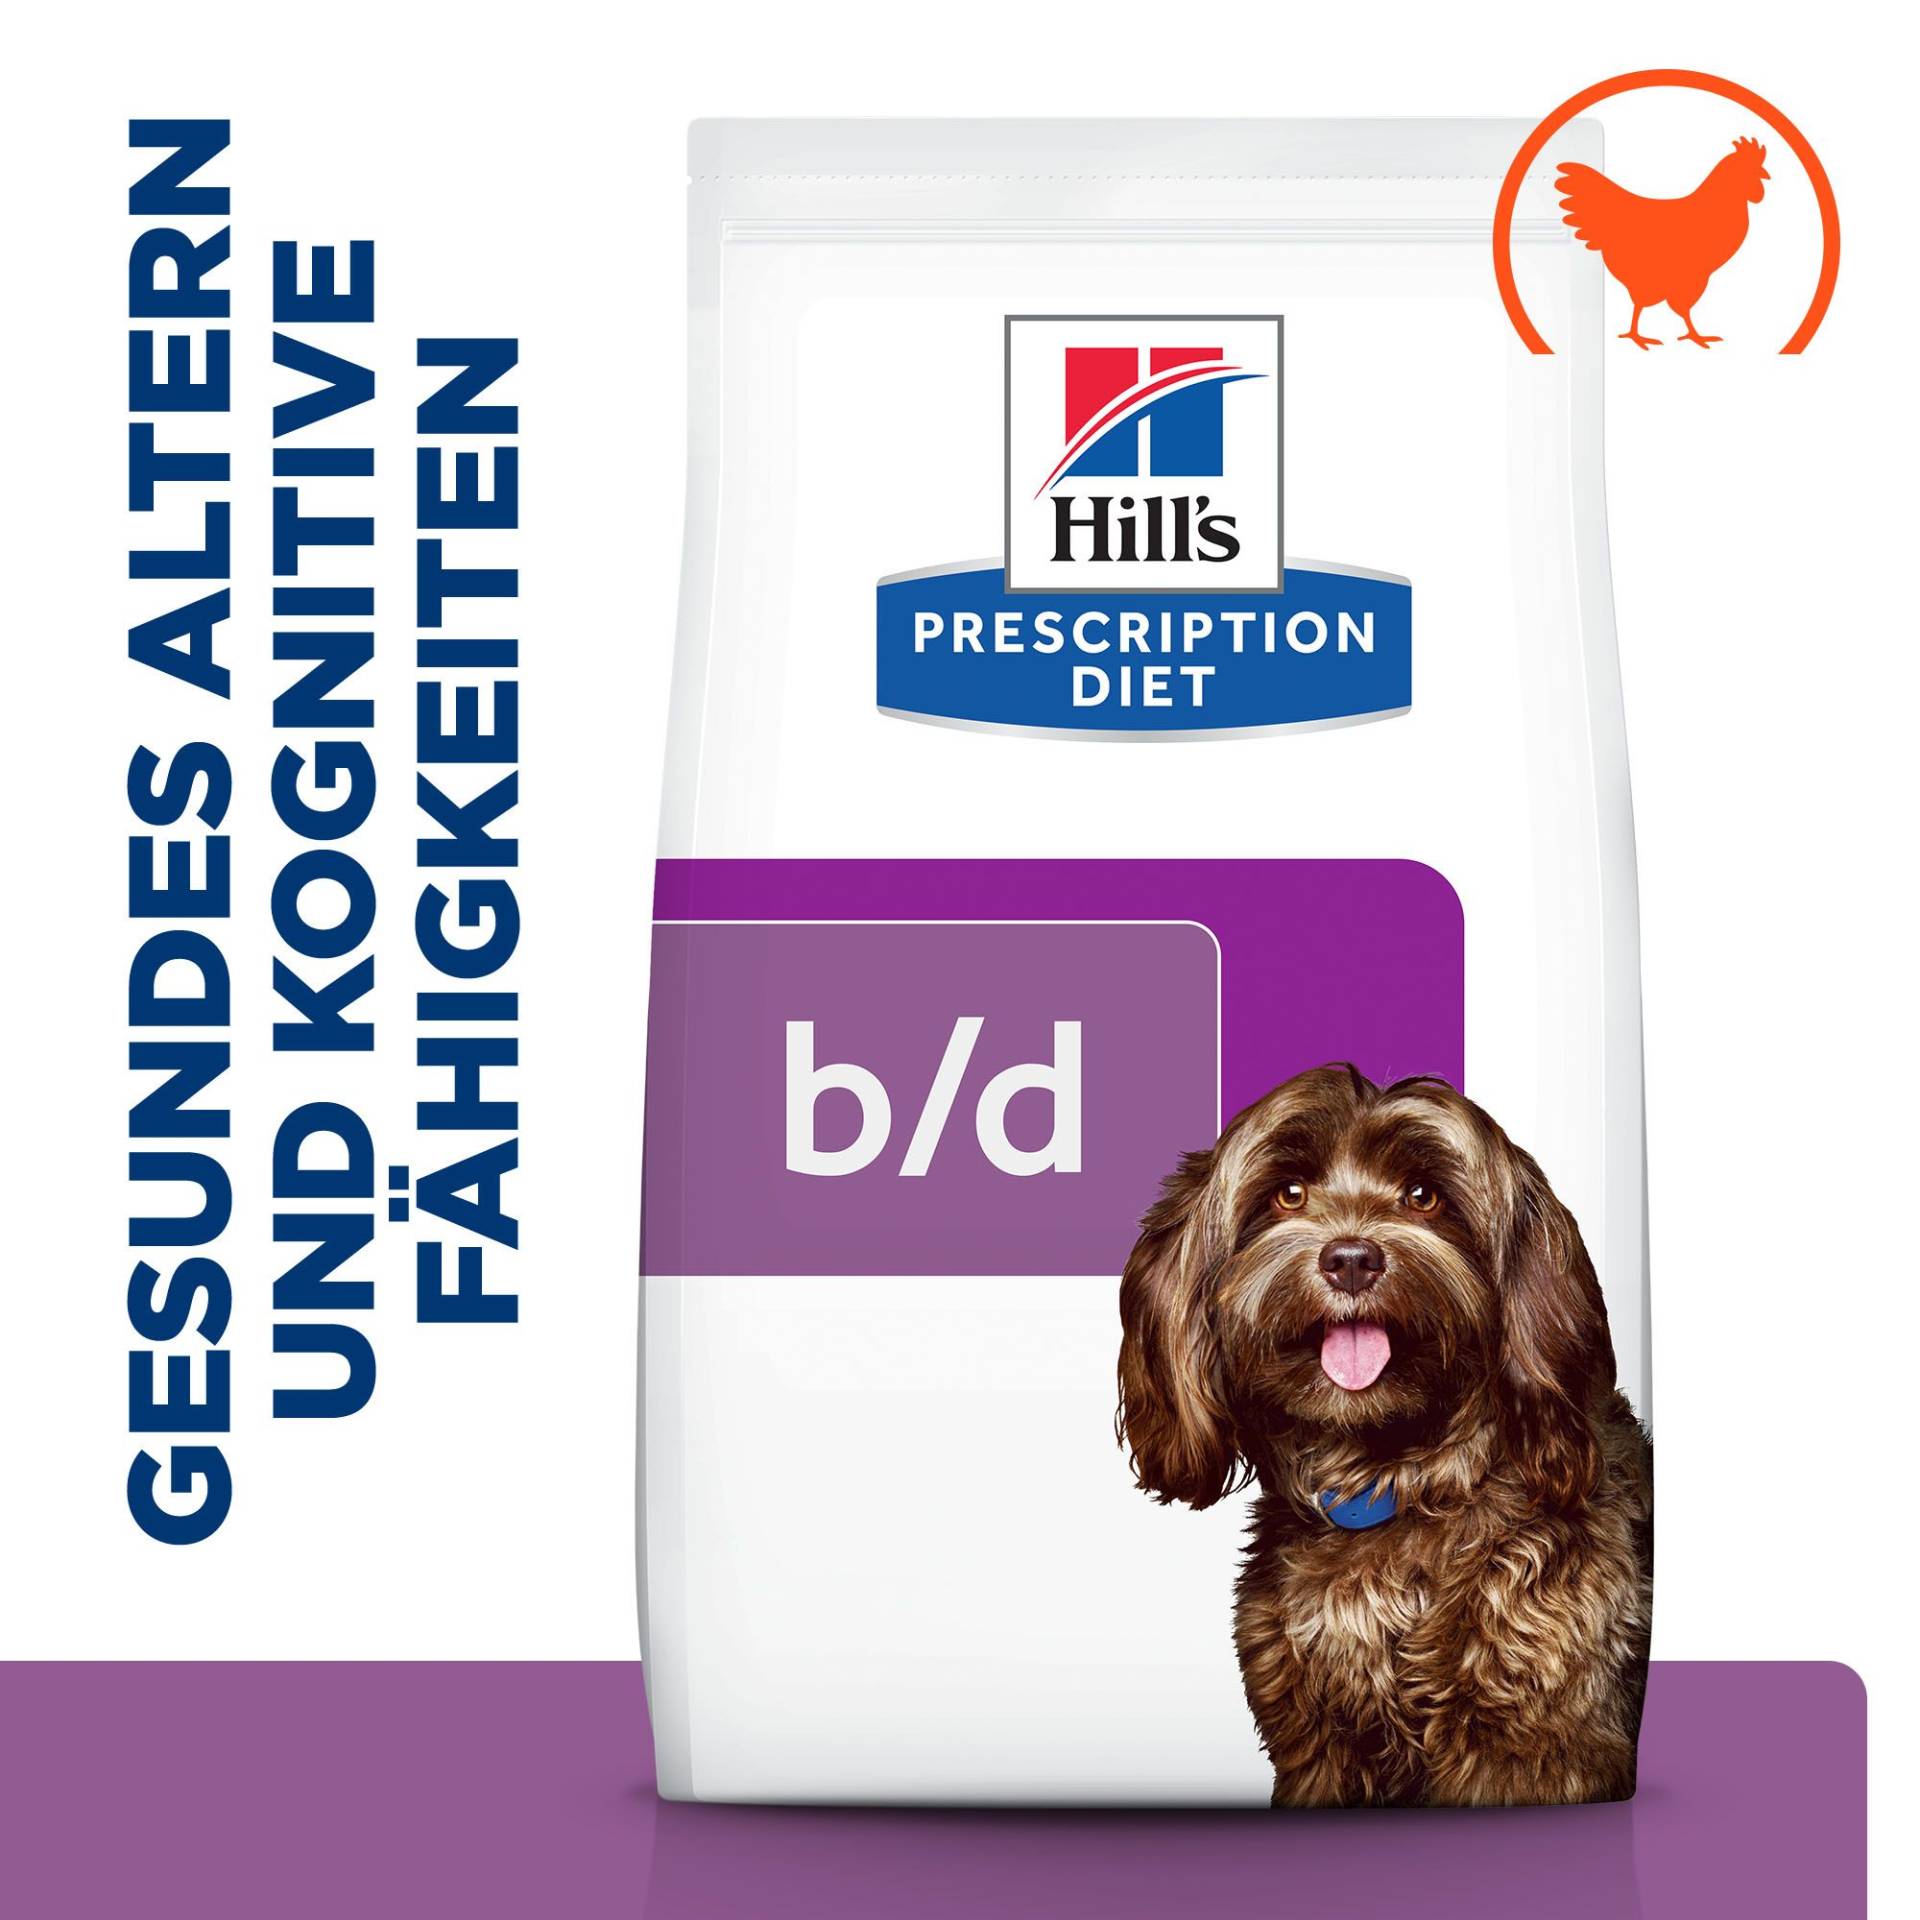 Hill's Precription Diet b/d Brain Ageing Care - Canine - 3 kg von Hills